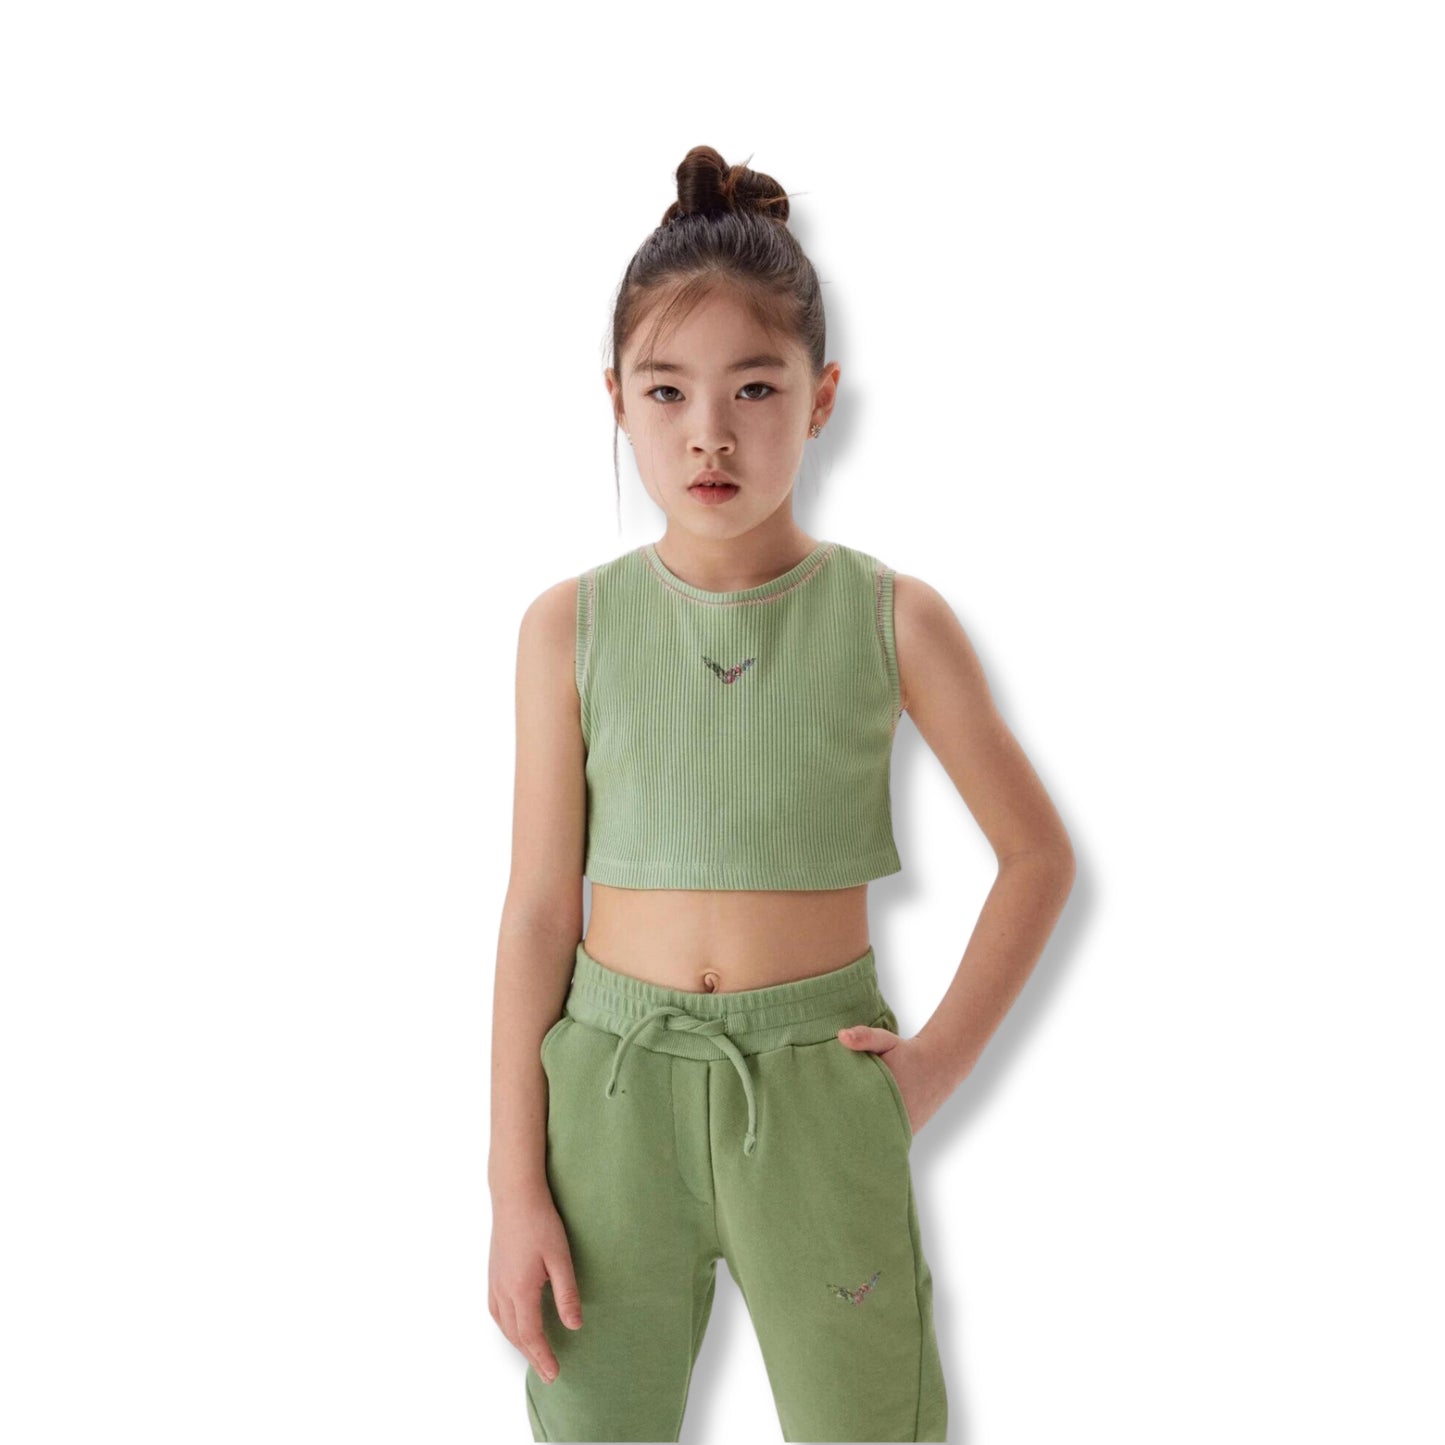 KidsKiddy™ 🍀 Girl's Green Cotton Sweatpants 🌿